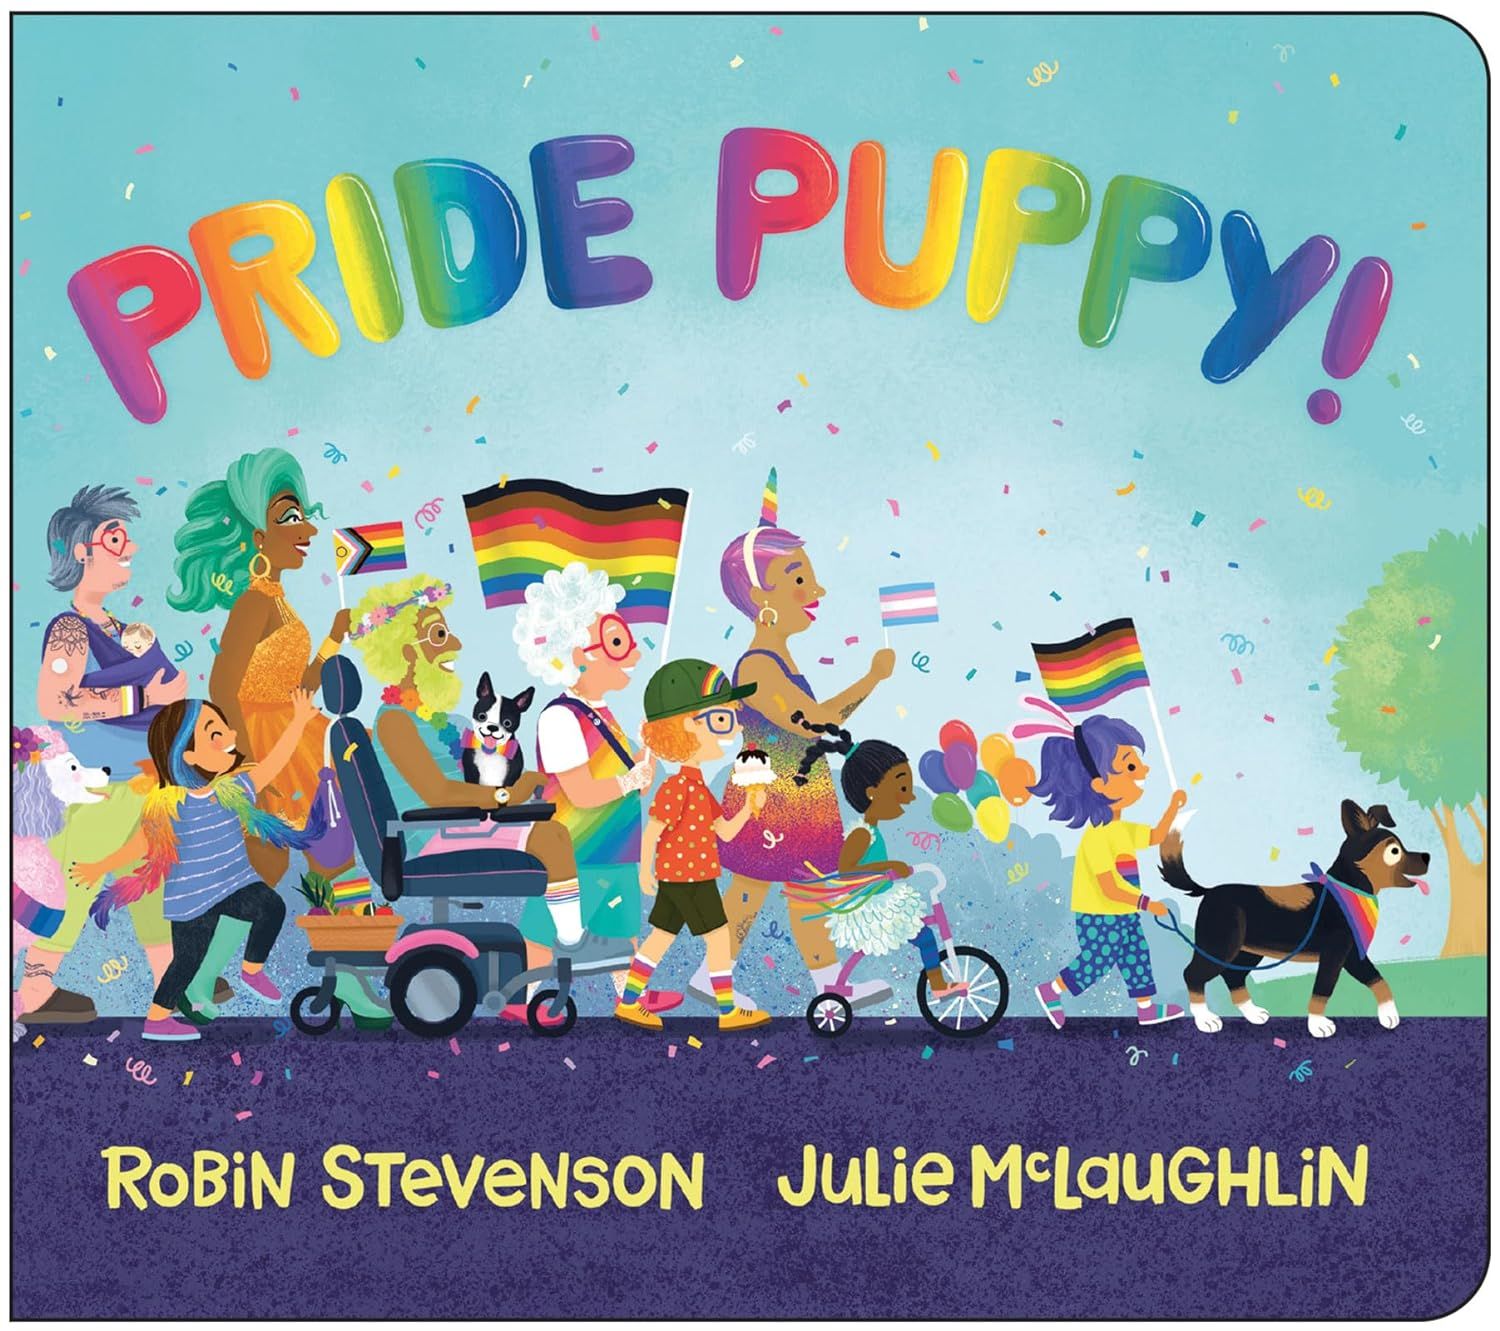 Cover of Pride Puppy! by Robin Stevenson & Julie McLaughlin